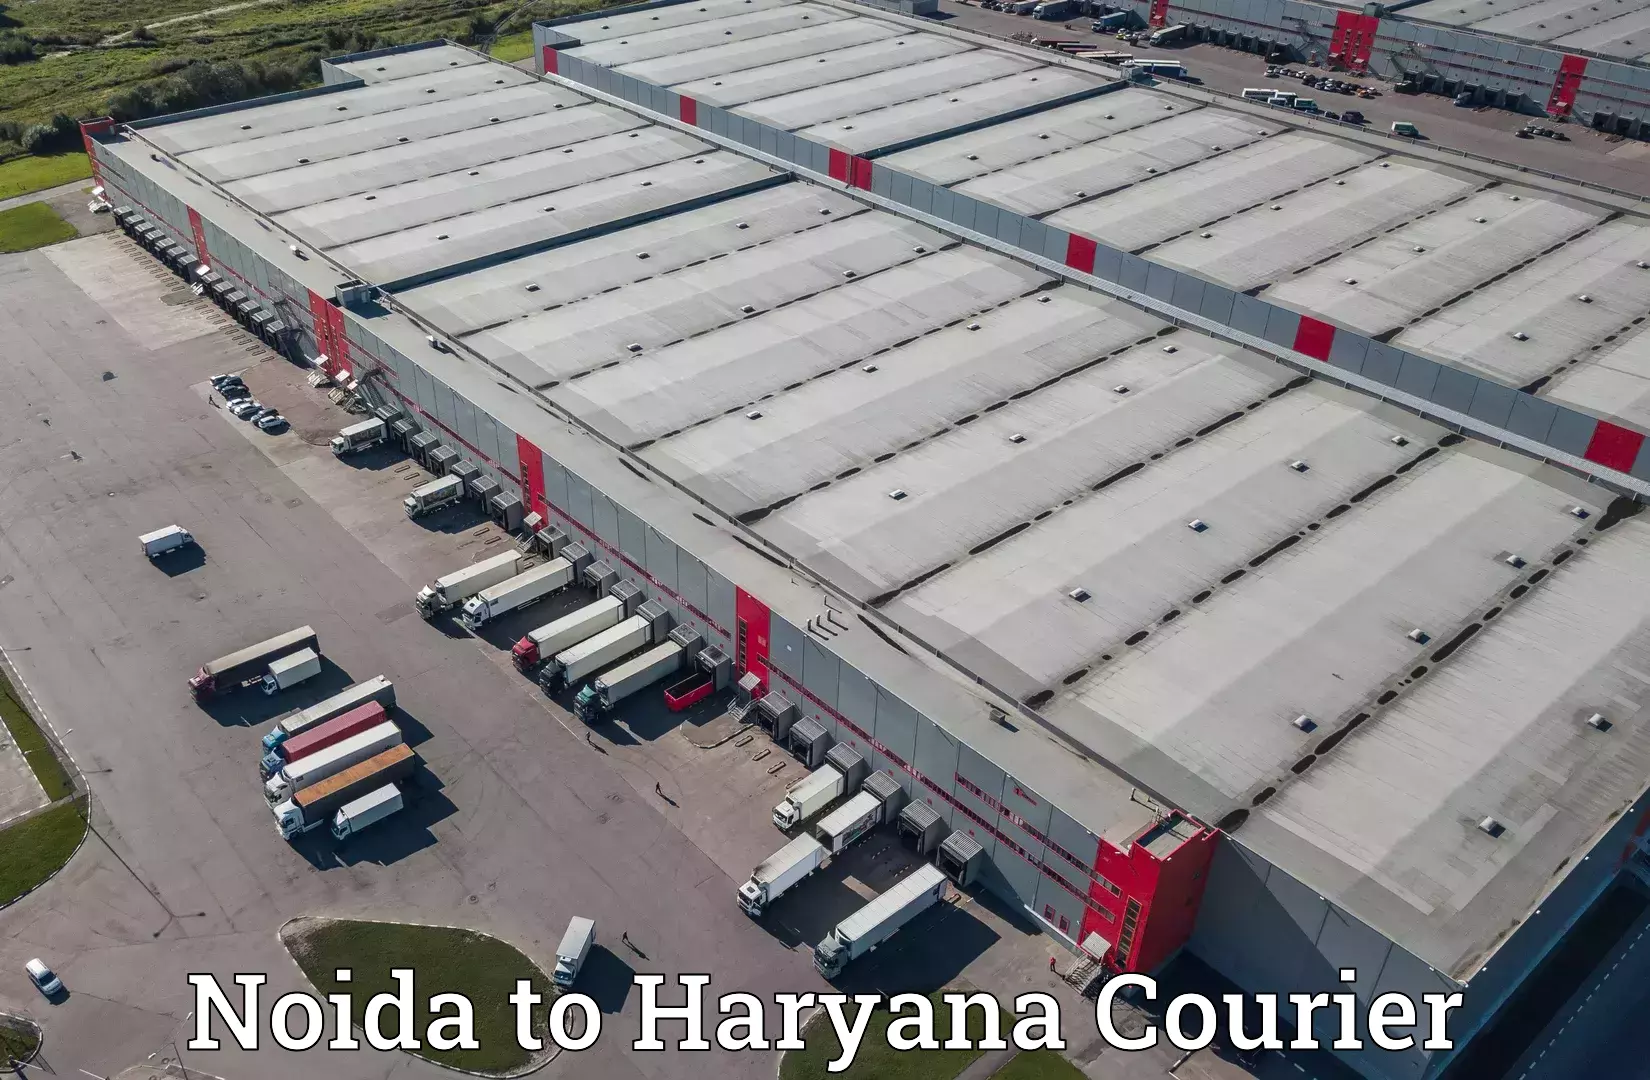 High-performance logistics Noida to NCR Haryana